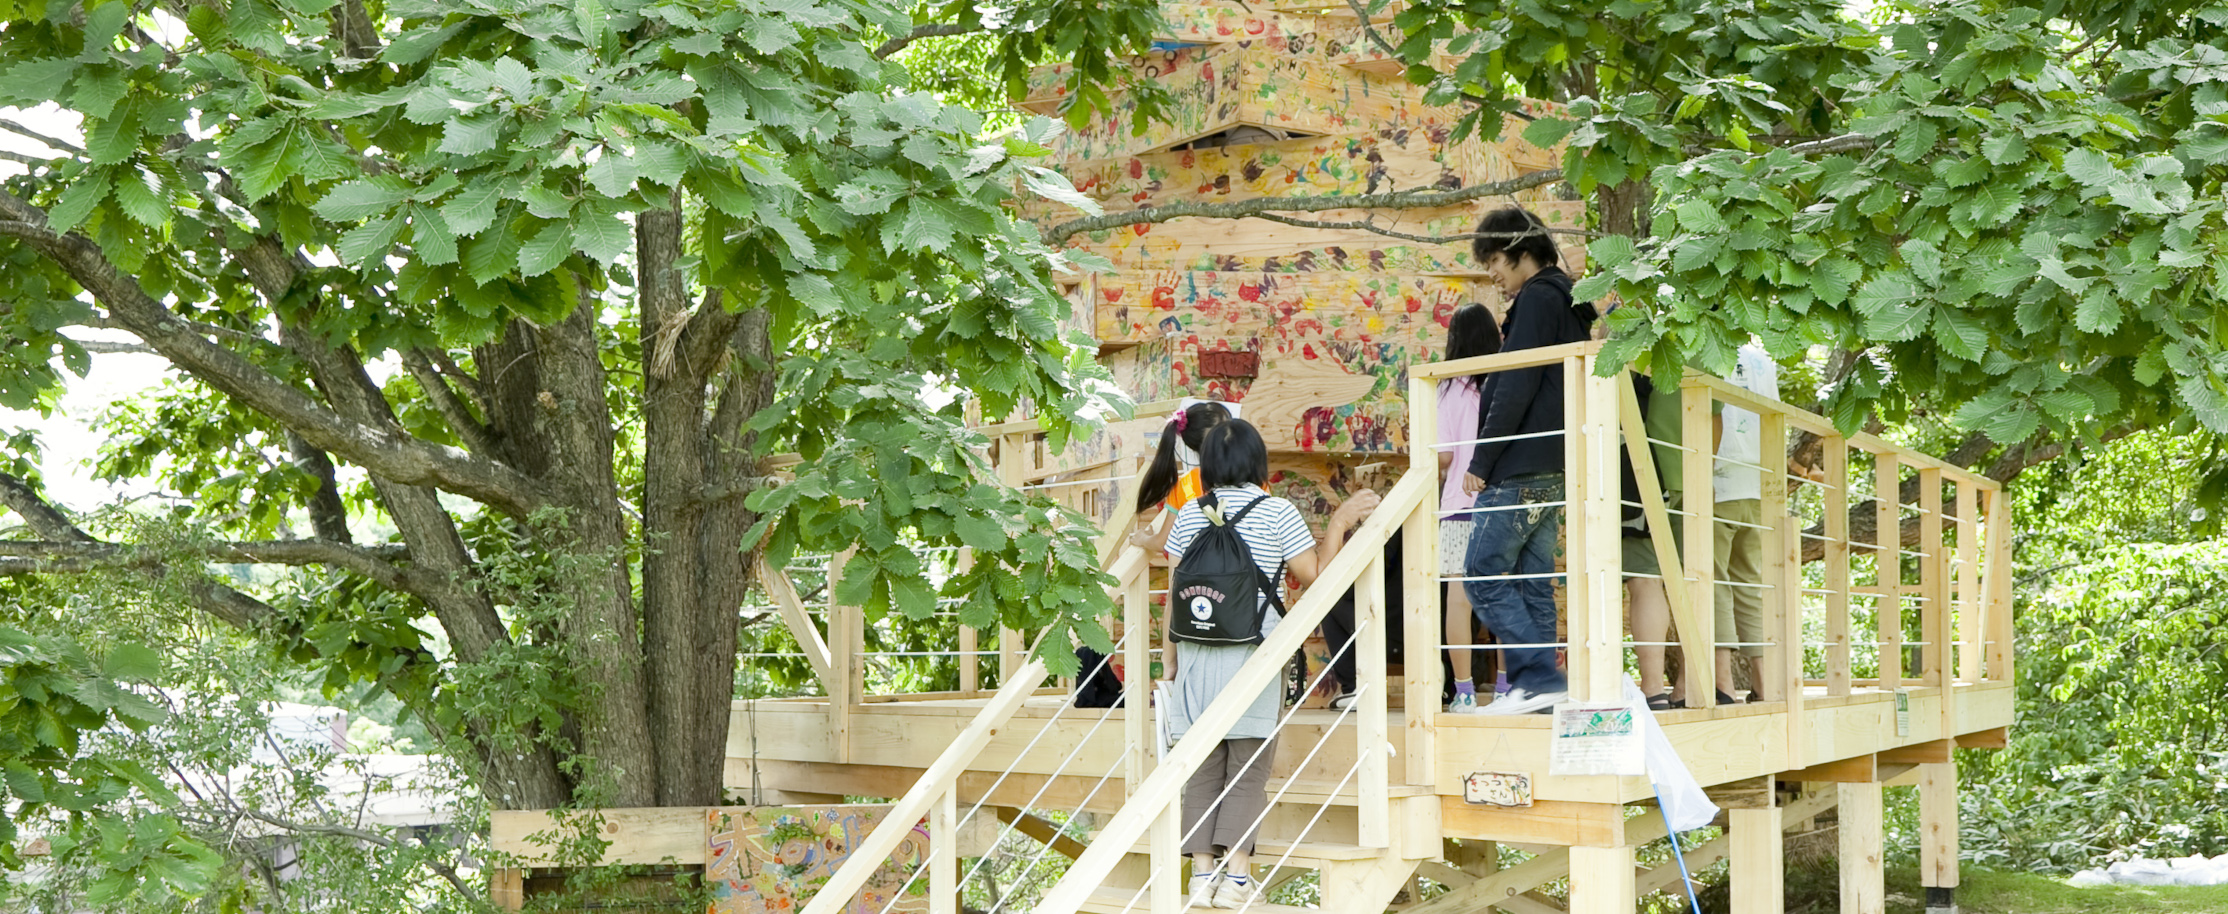 Vol 9 札幌芸術の森で子どもたちとツリーハウスを製作 11 連載企画 清水建設株式会社 東京木工場